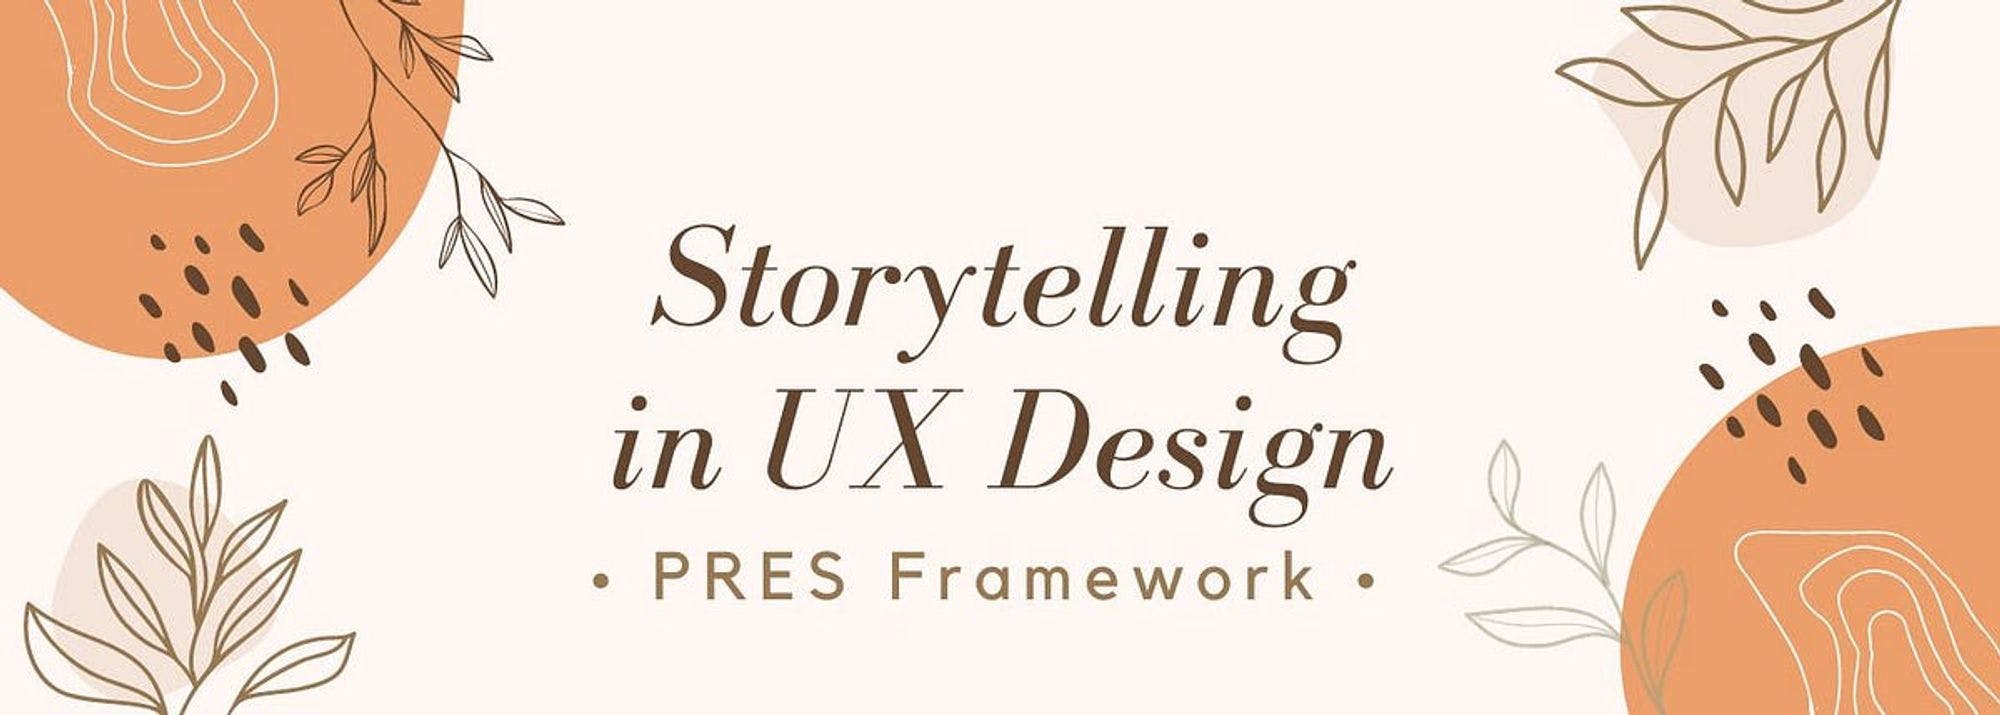 Storytelling in UX Design — PRES Framework